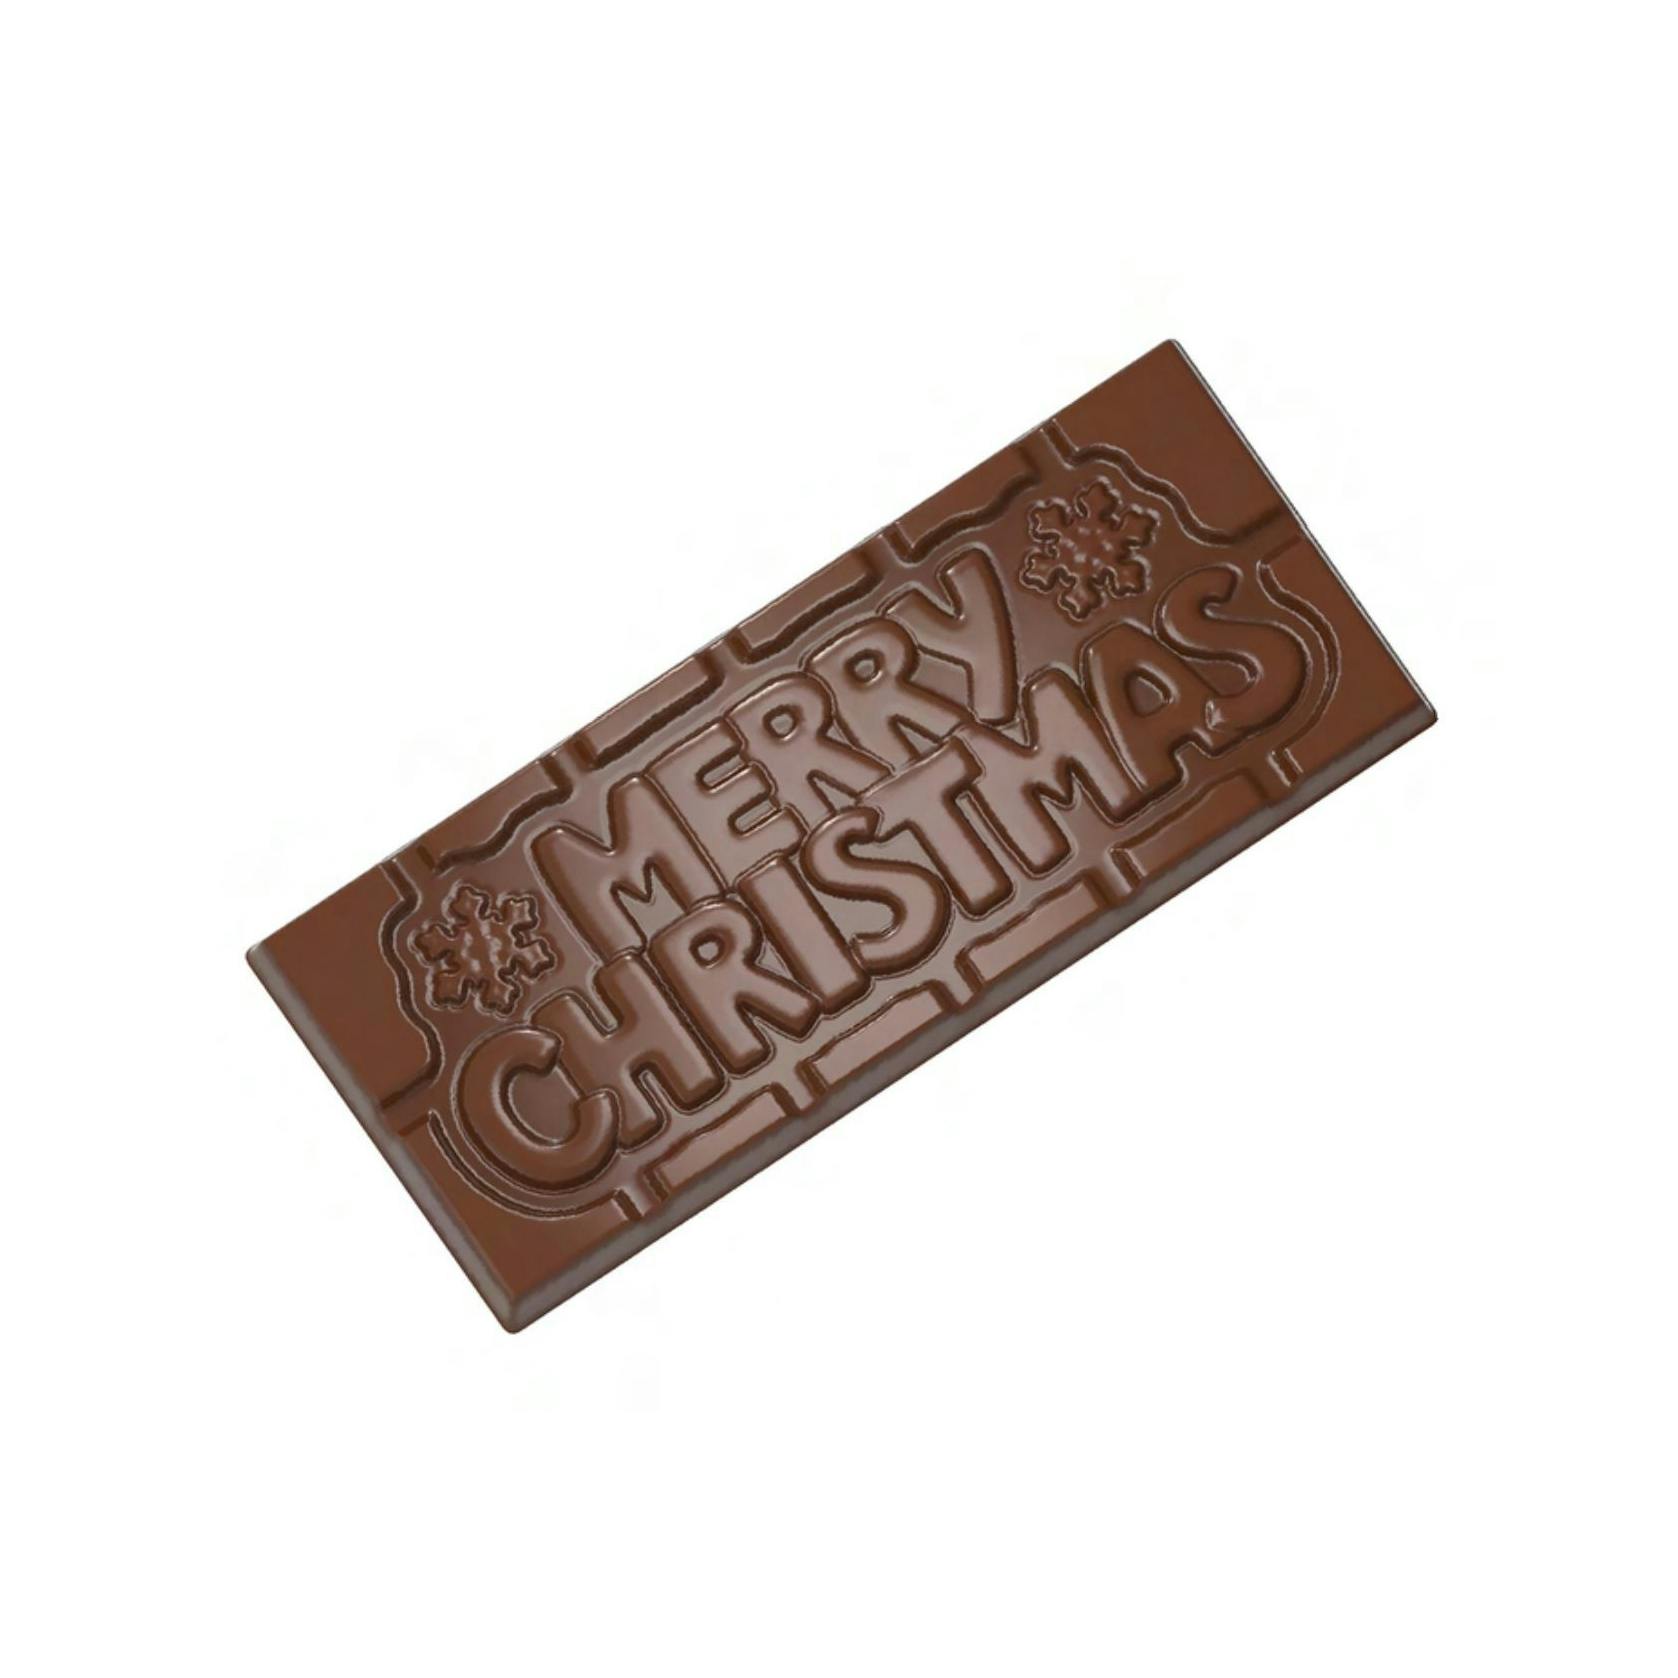 Wishes - 70% Kakao - Merry Christmas (x 32st)